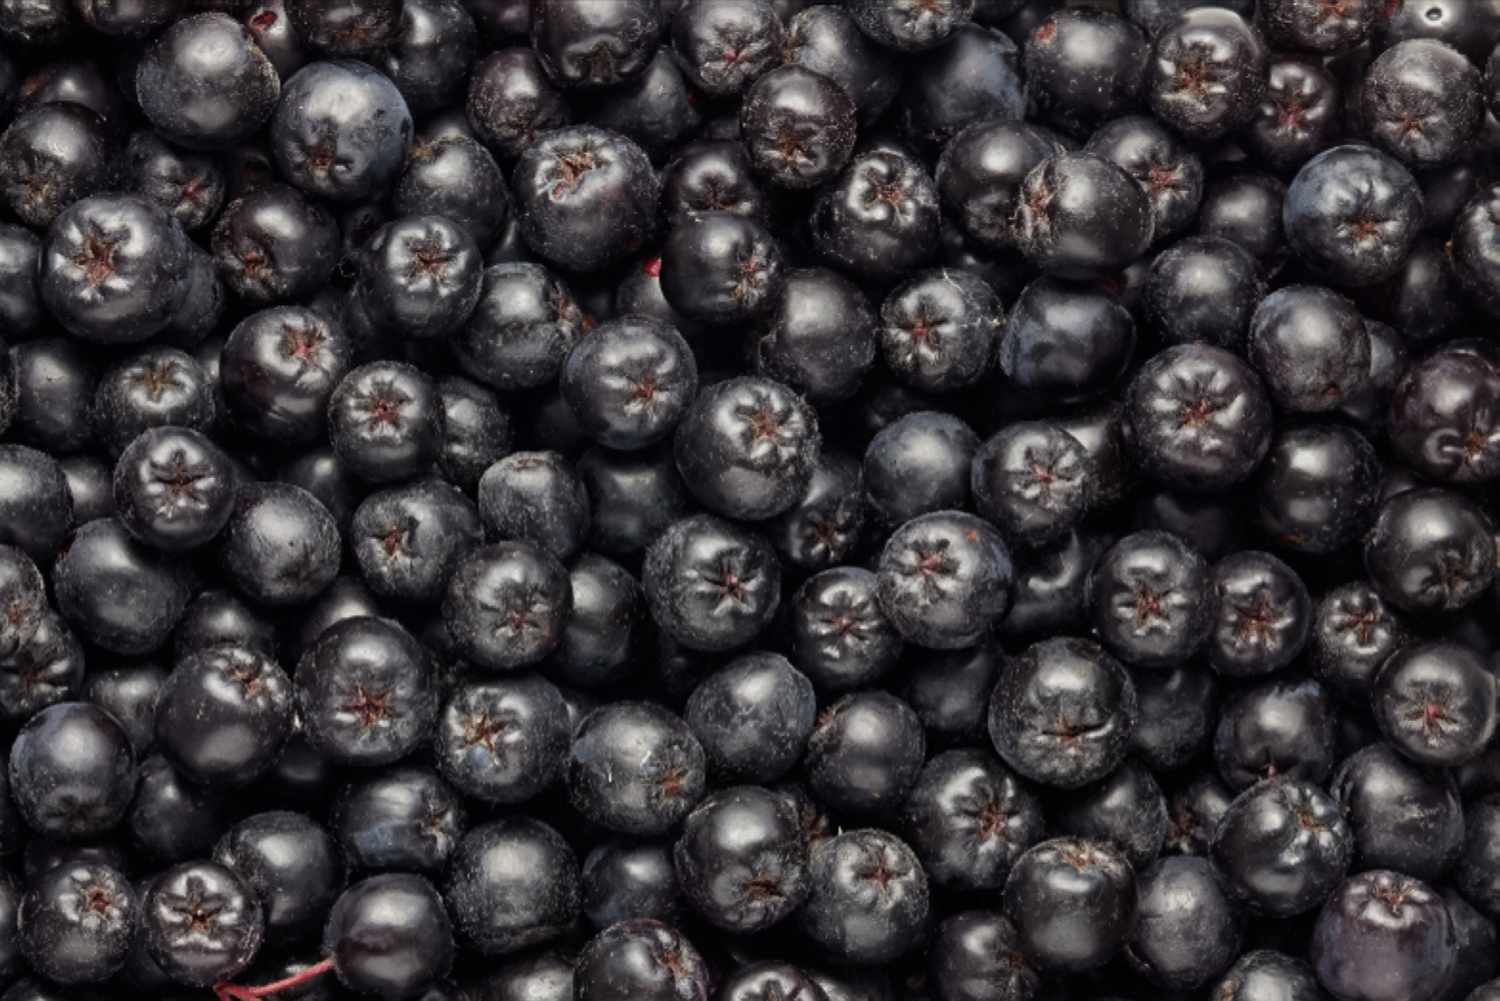 Primer plano de frutos de chokeberry negros apilados unos sobre otros